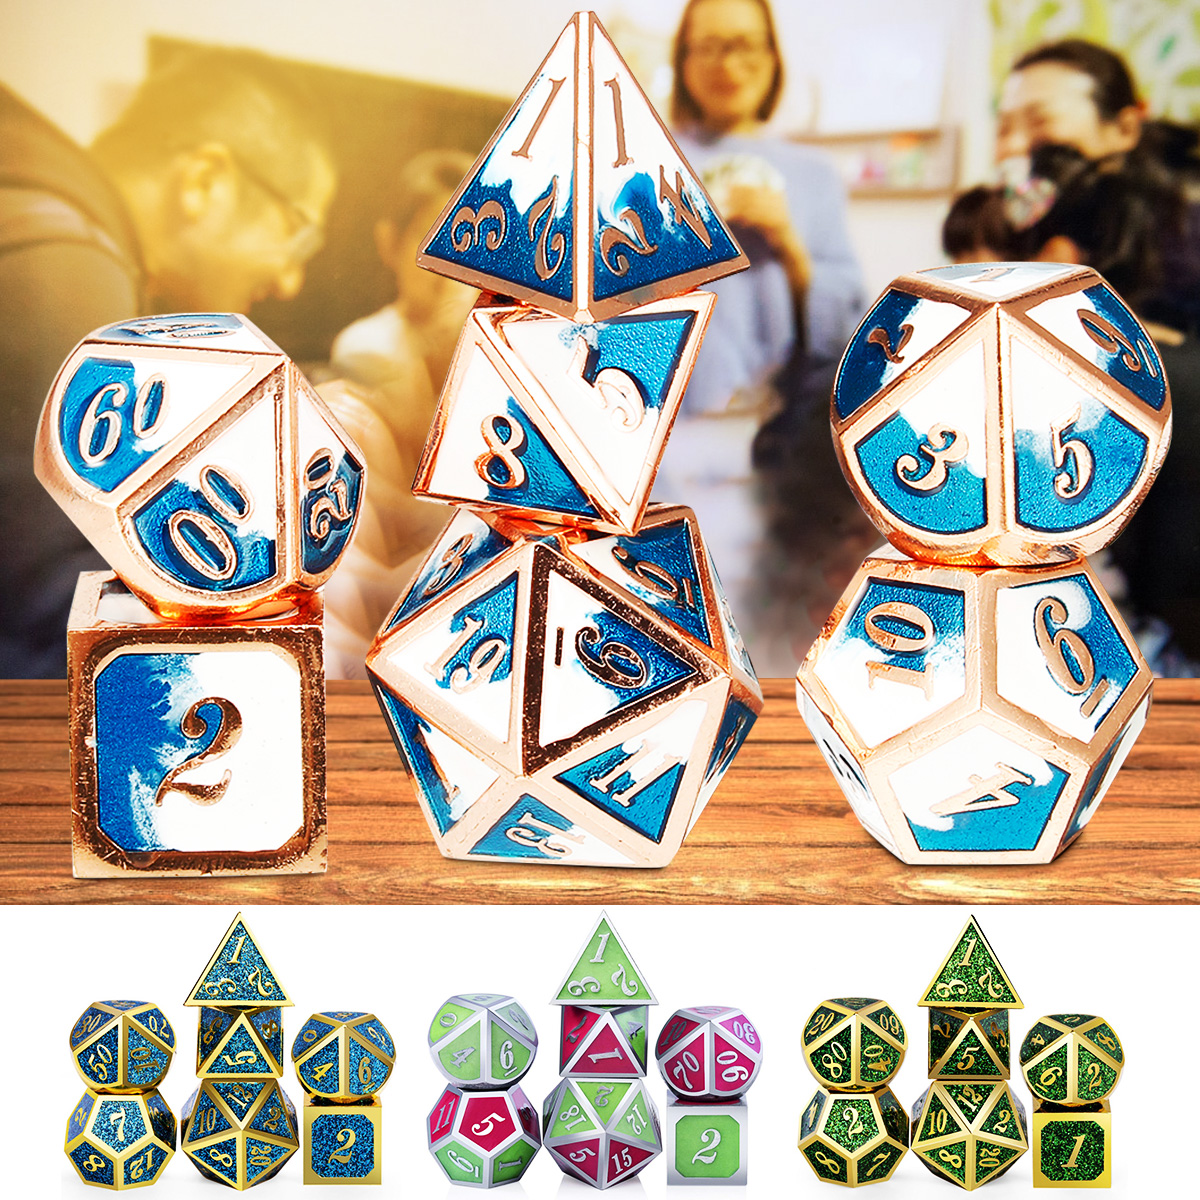 Chenso Dice Beads New Metal Dice 7pcs//set RPG Dice D/&D Board Game Toy D4 D6 D8 D10 D12 D20 Magic Props Polyhedral Dice